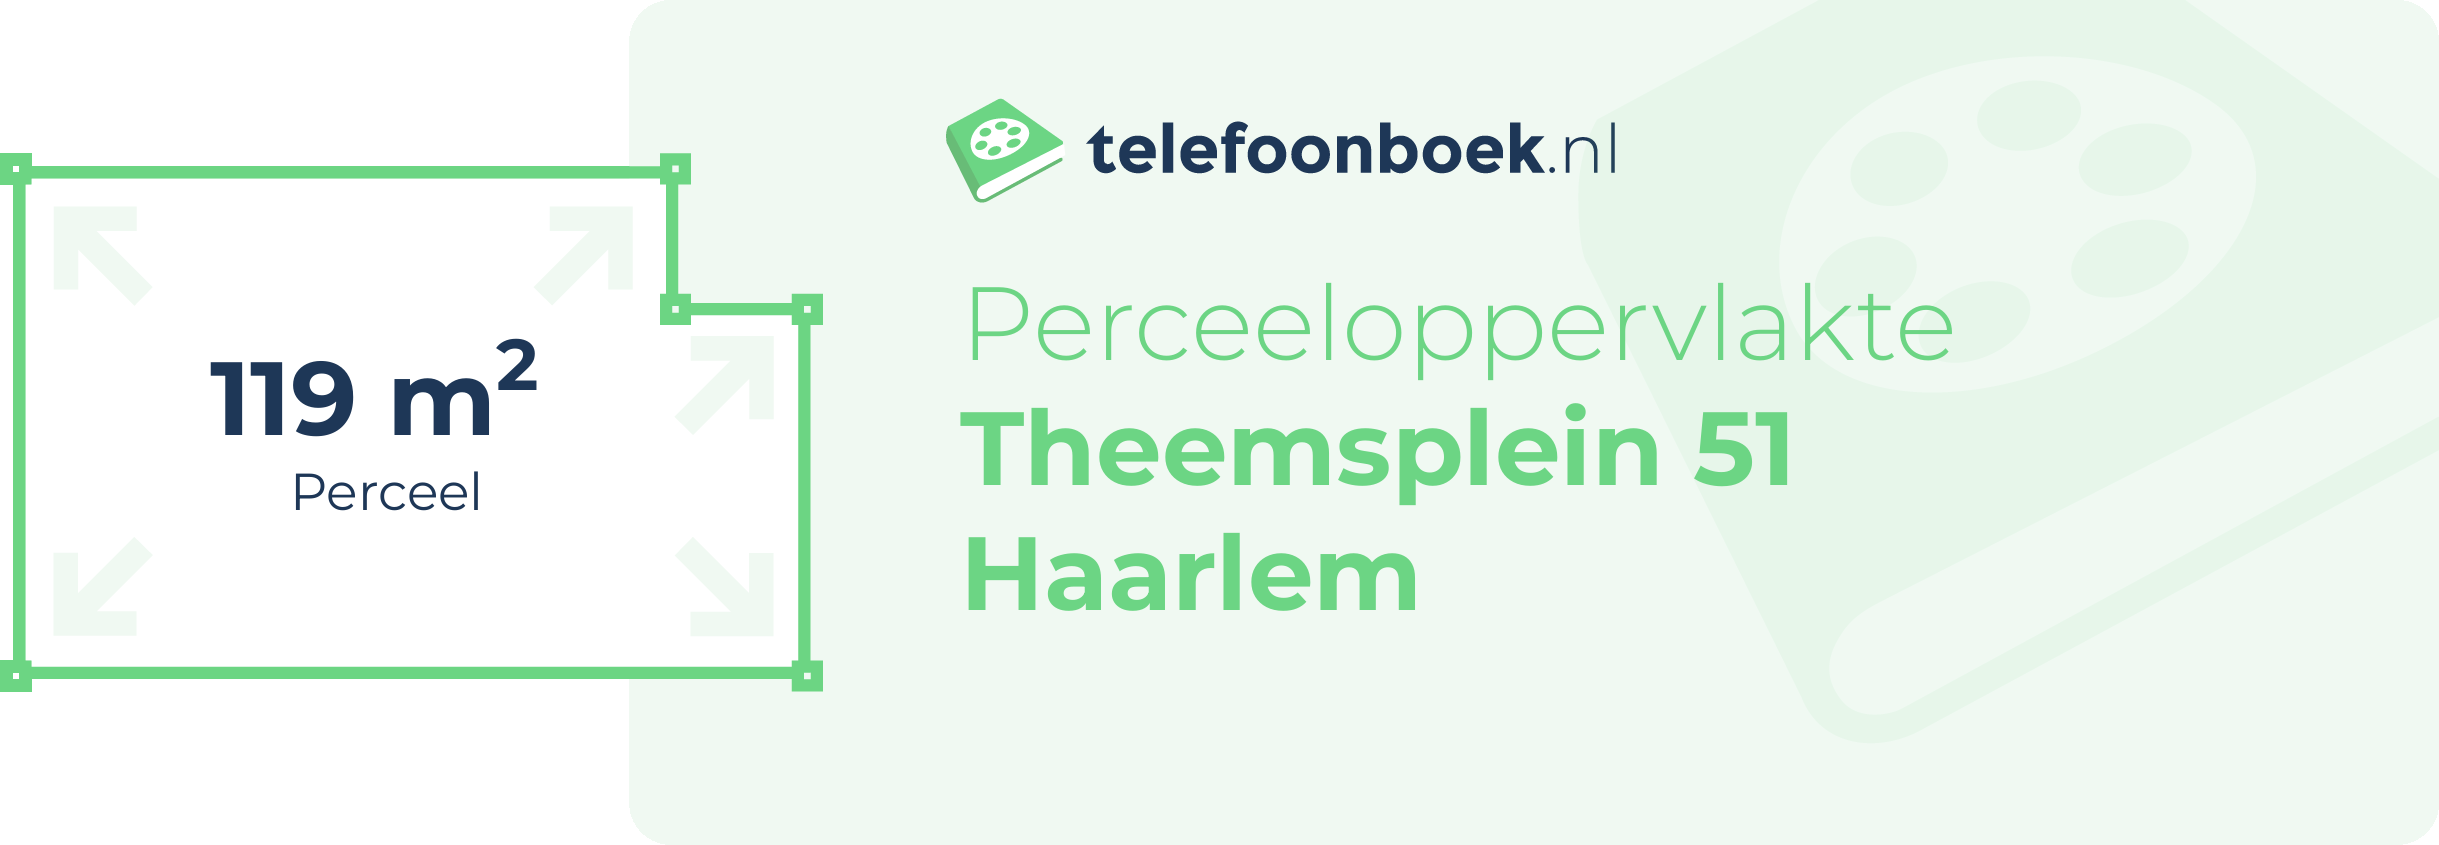 Perceeloppervlakte Theemsplein 51 Haarlem